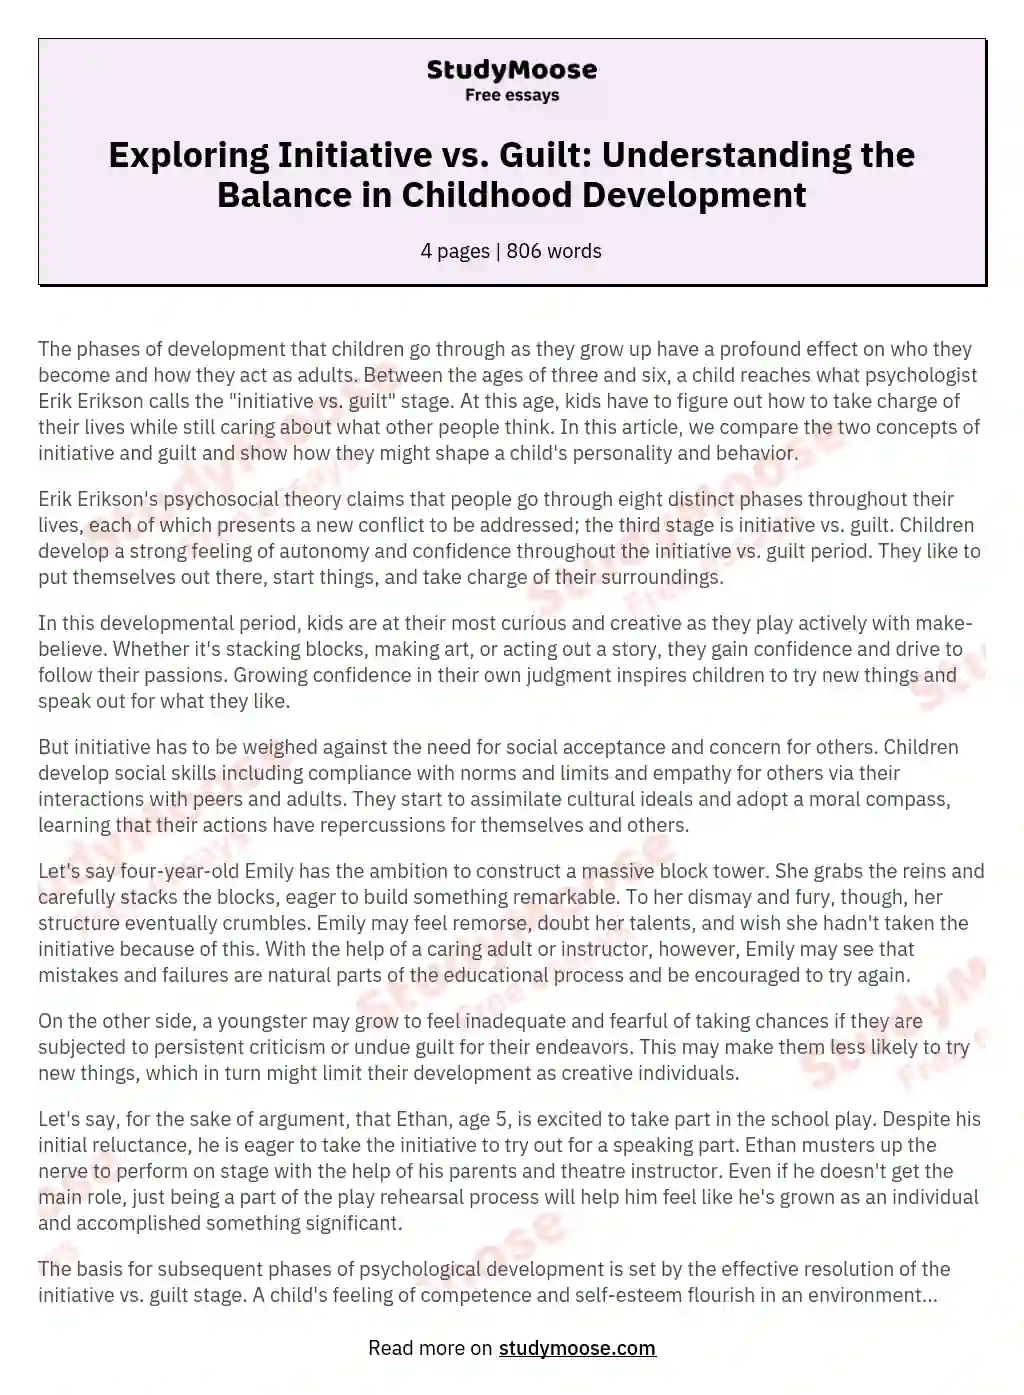 Exploring Initiative vs. Guilt: Understanding the Balance in Childhood Development essay